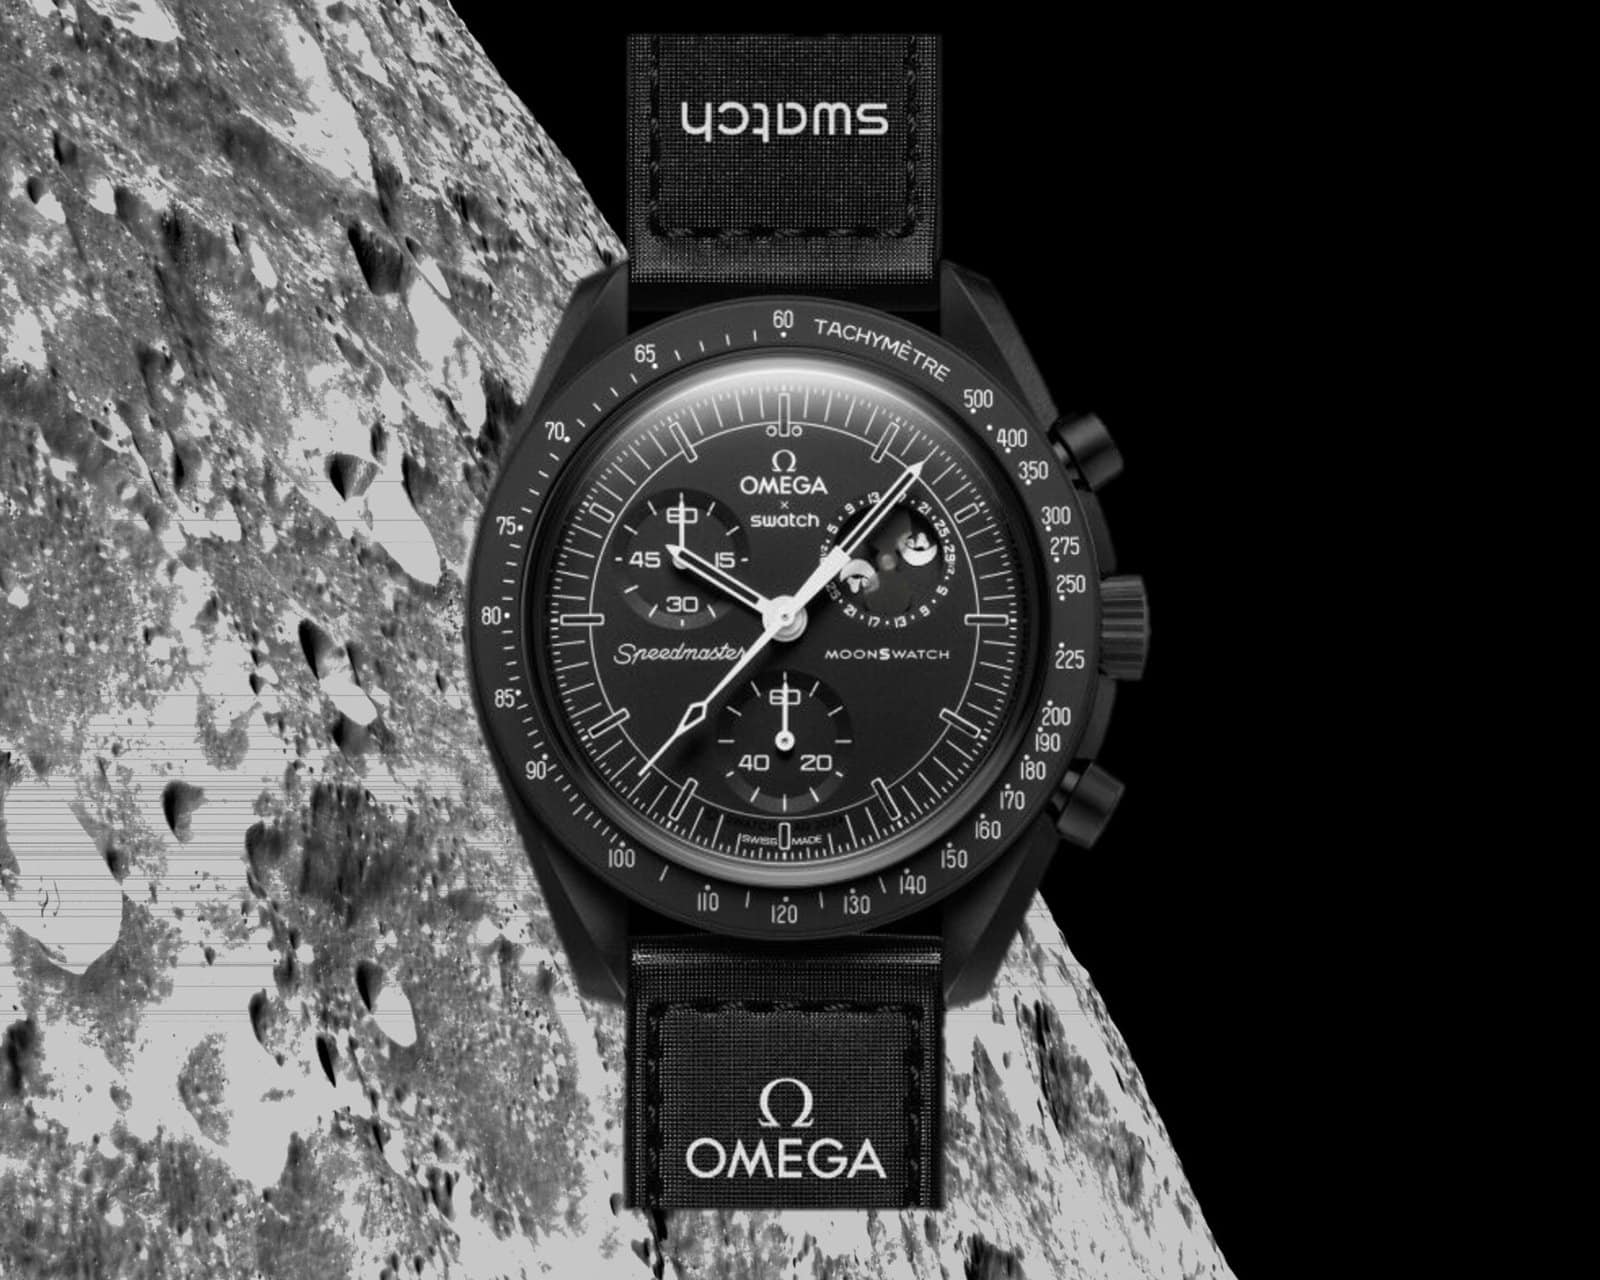 Rückseite des Mondes mit MoonSwatch Mission to the Moonphase